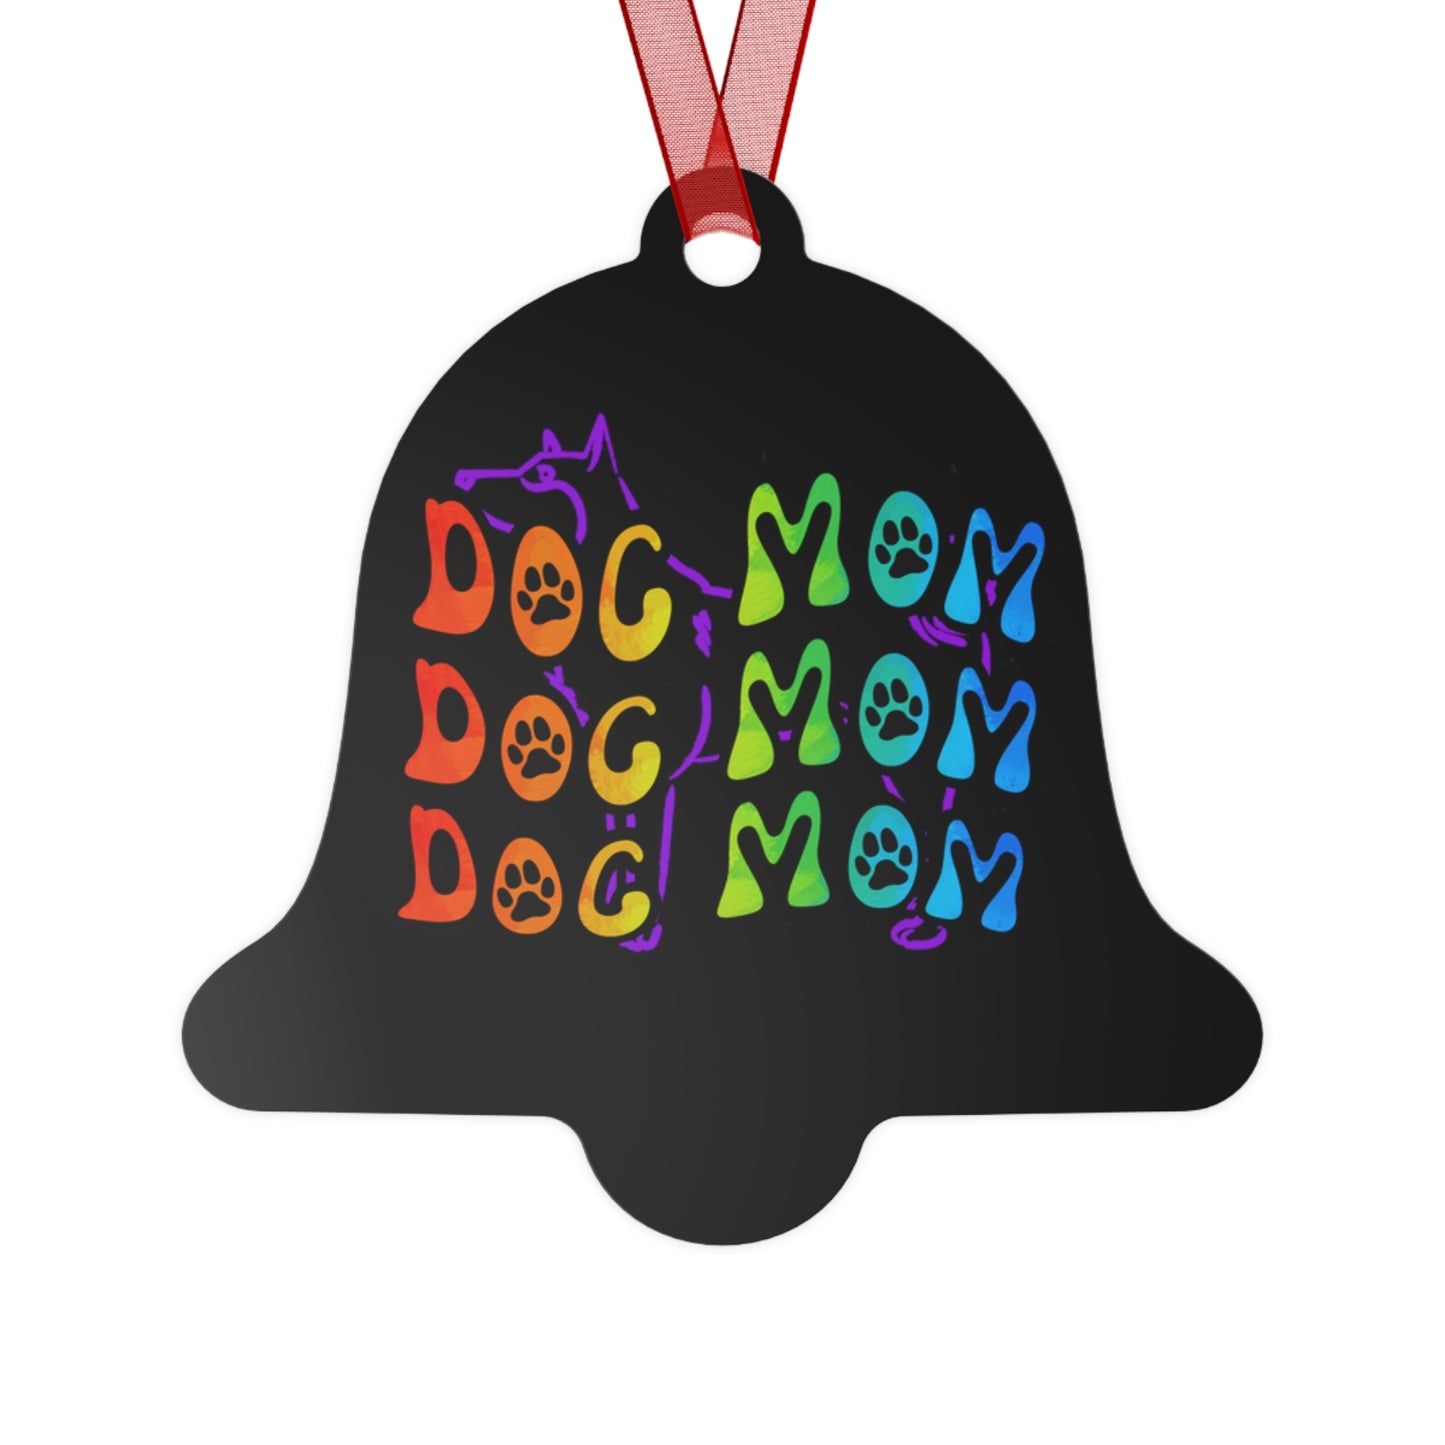 Dog Mom Metal Ornament Bell